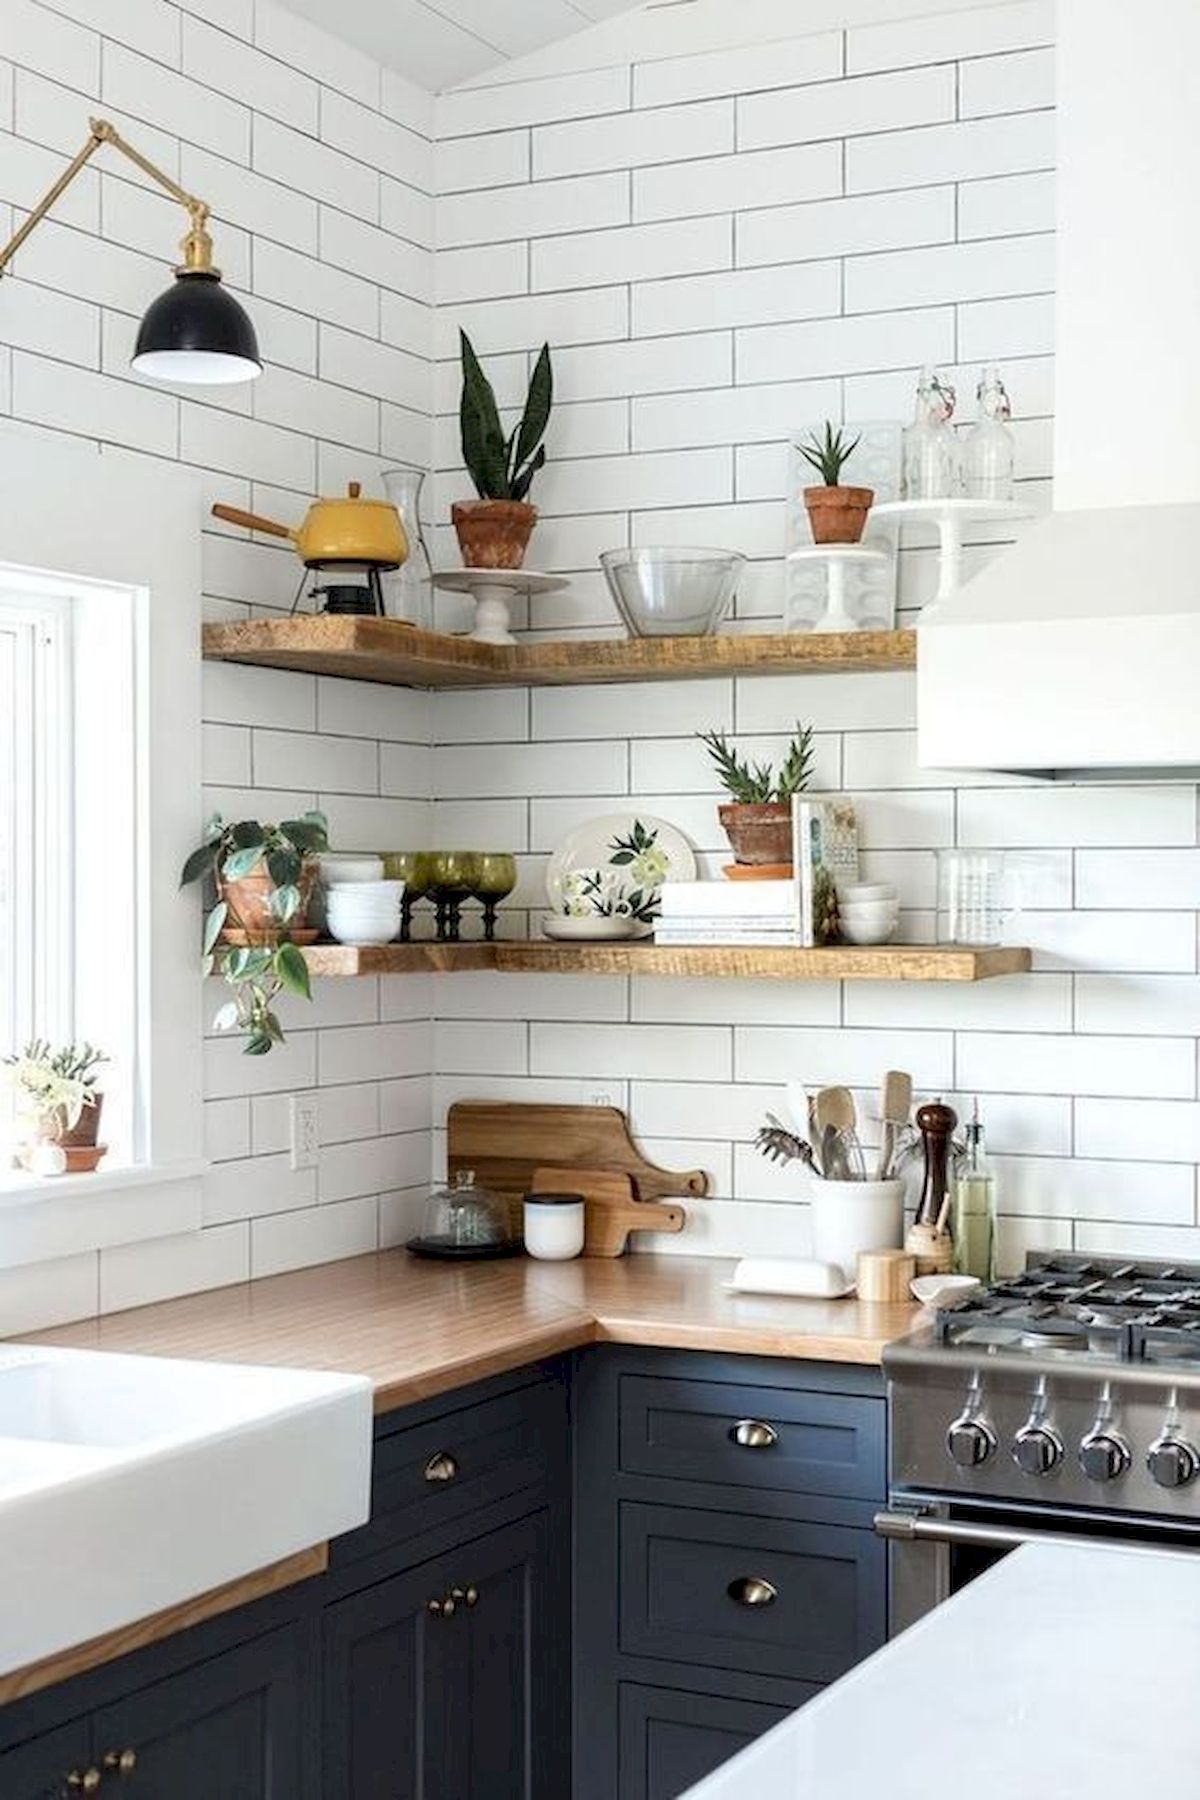 45 Easy Kitchen Decor And Design Ideas (42)